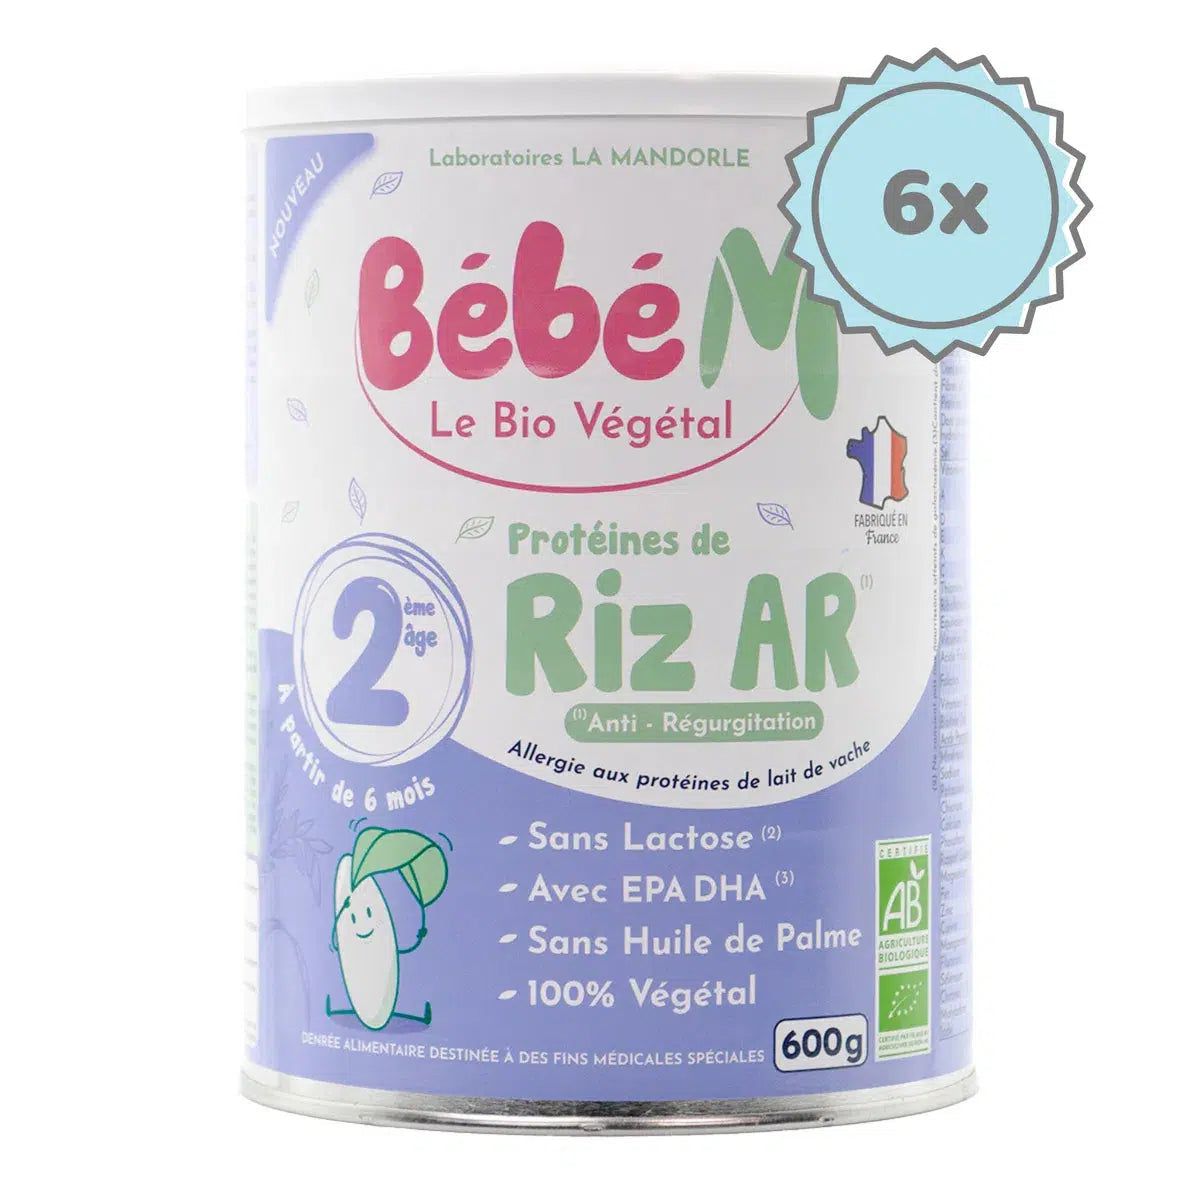 Bebe M (Bebe Mandorle) Organic Anti-Reflux Rice-Based Formula - Stage 2 (6+ months) - (600g)